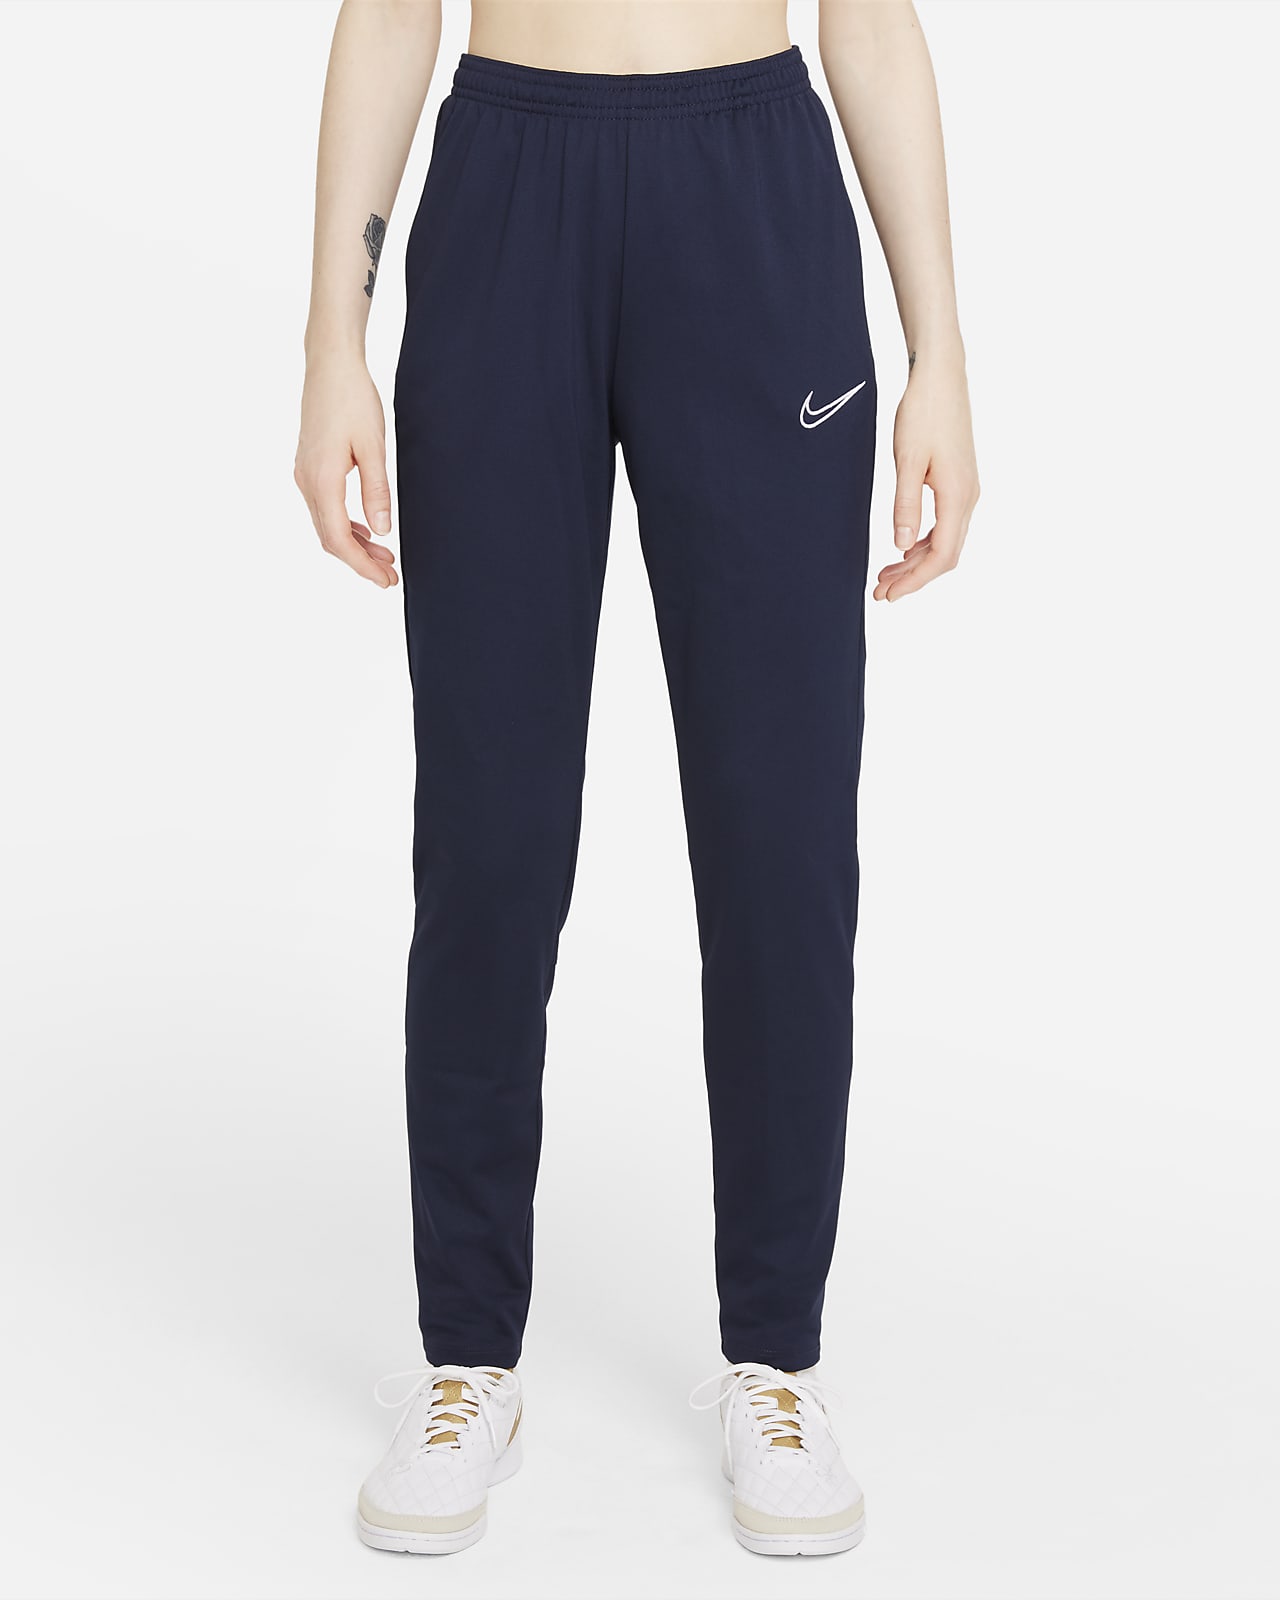 Nike Dry Academy 21 Knit Soccer Pant Women's M Navy Blue CV2665 Dri-Fit  White